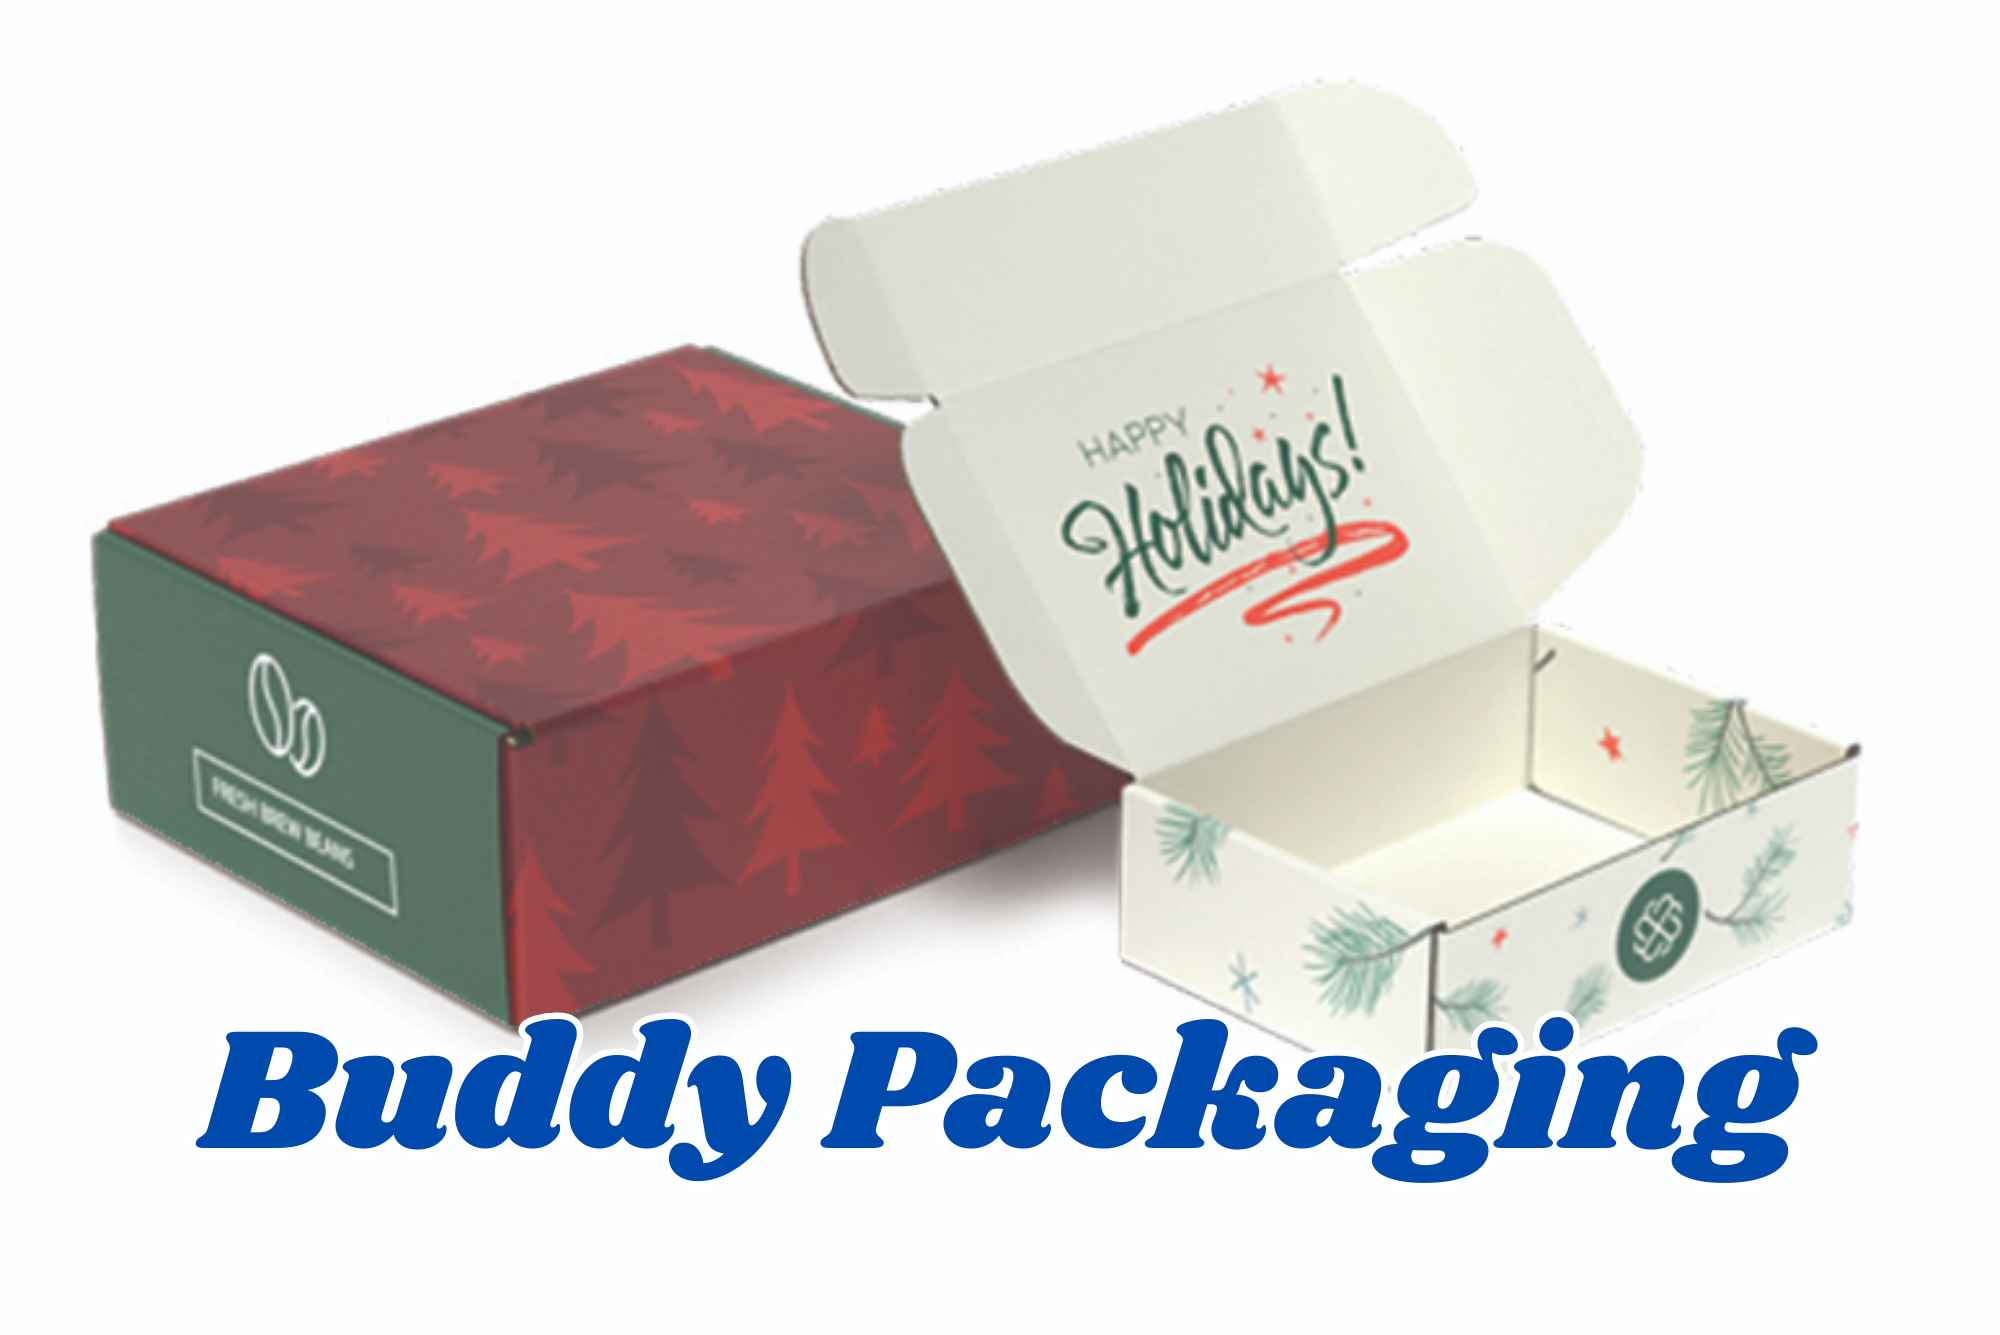 Buddy Packaging